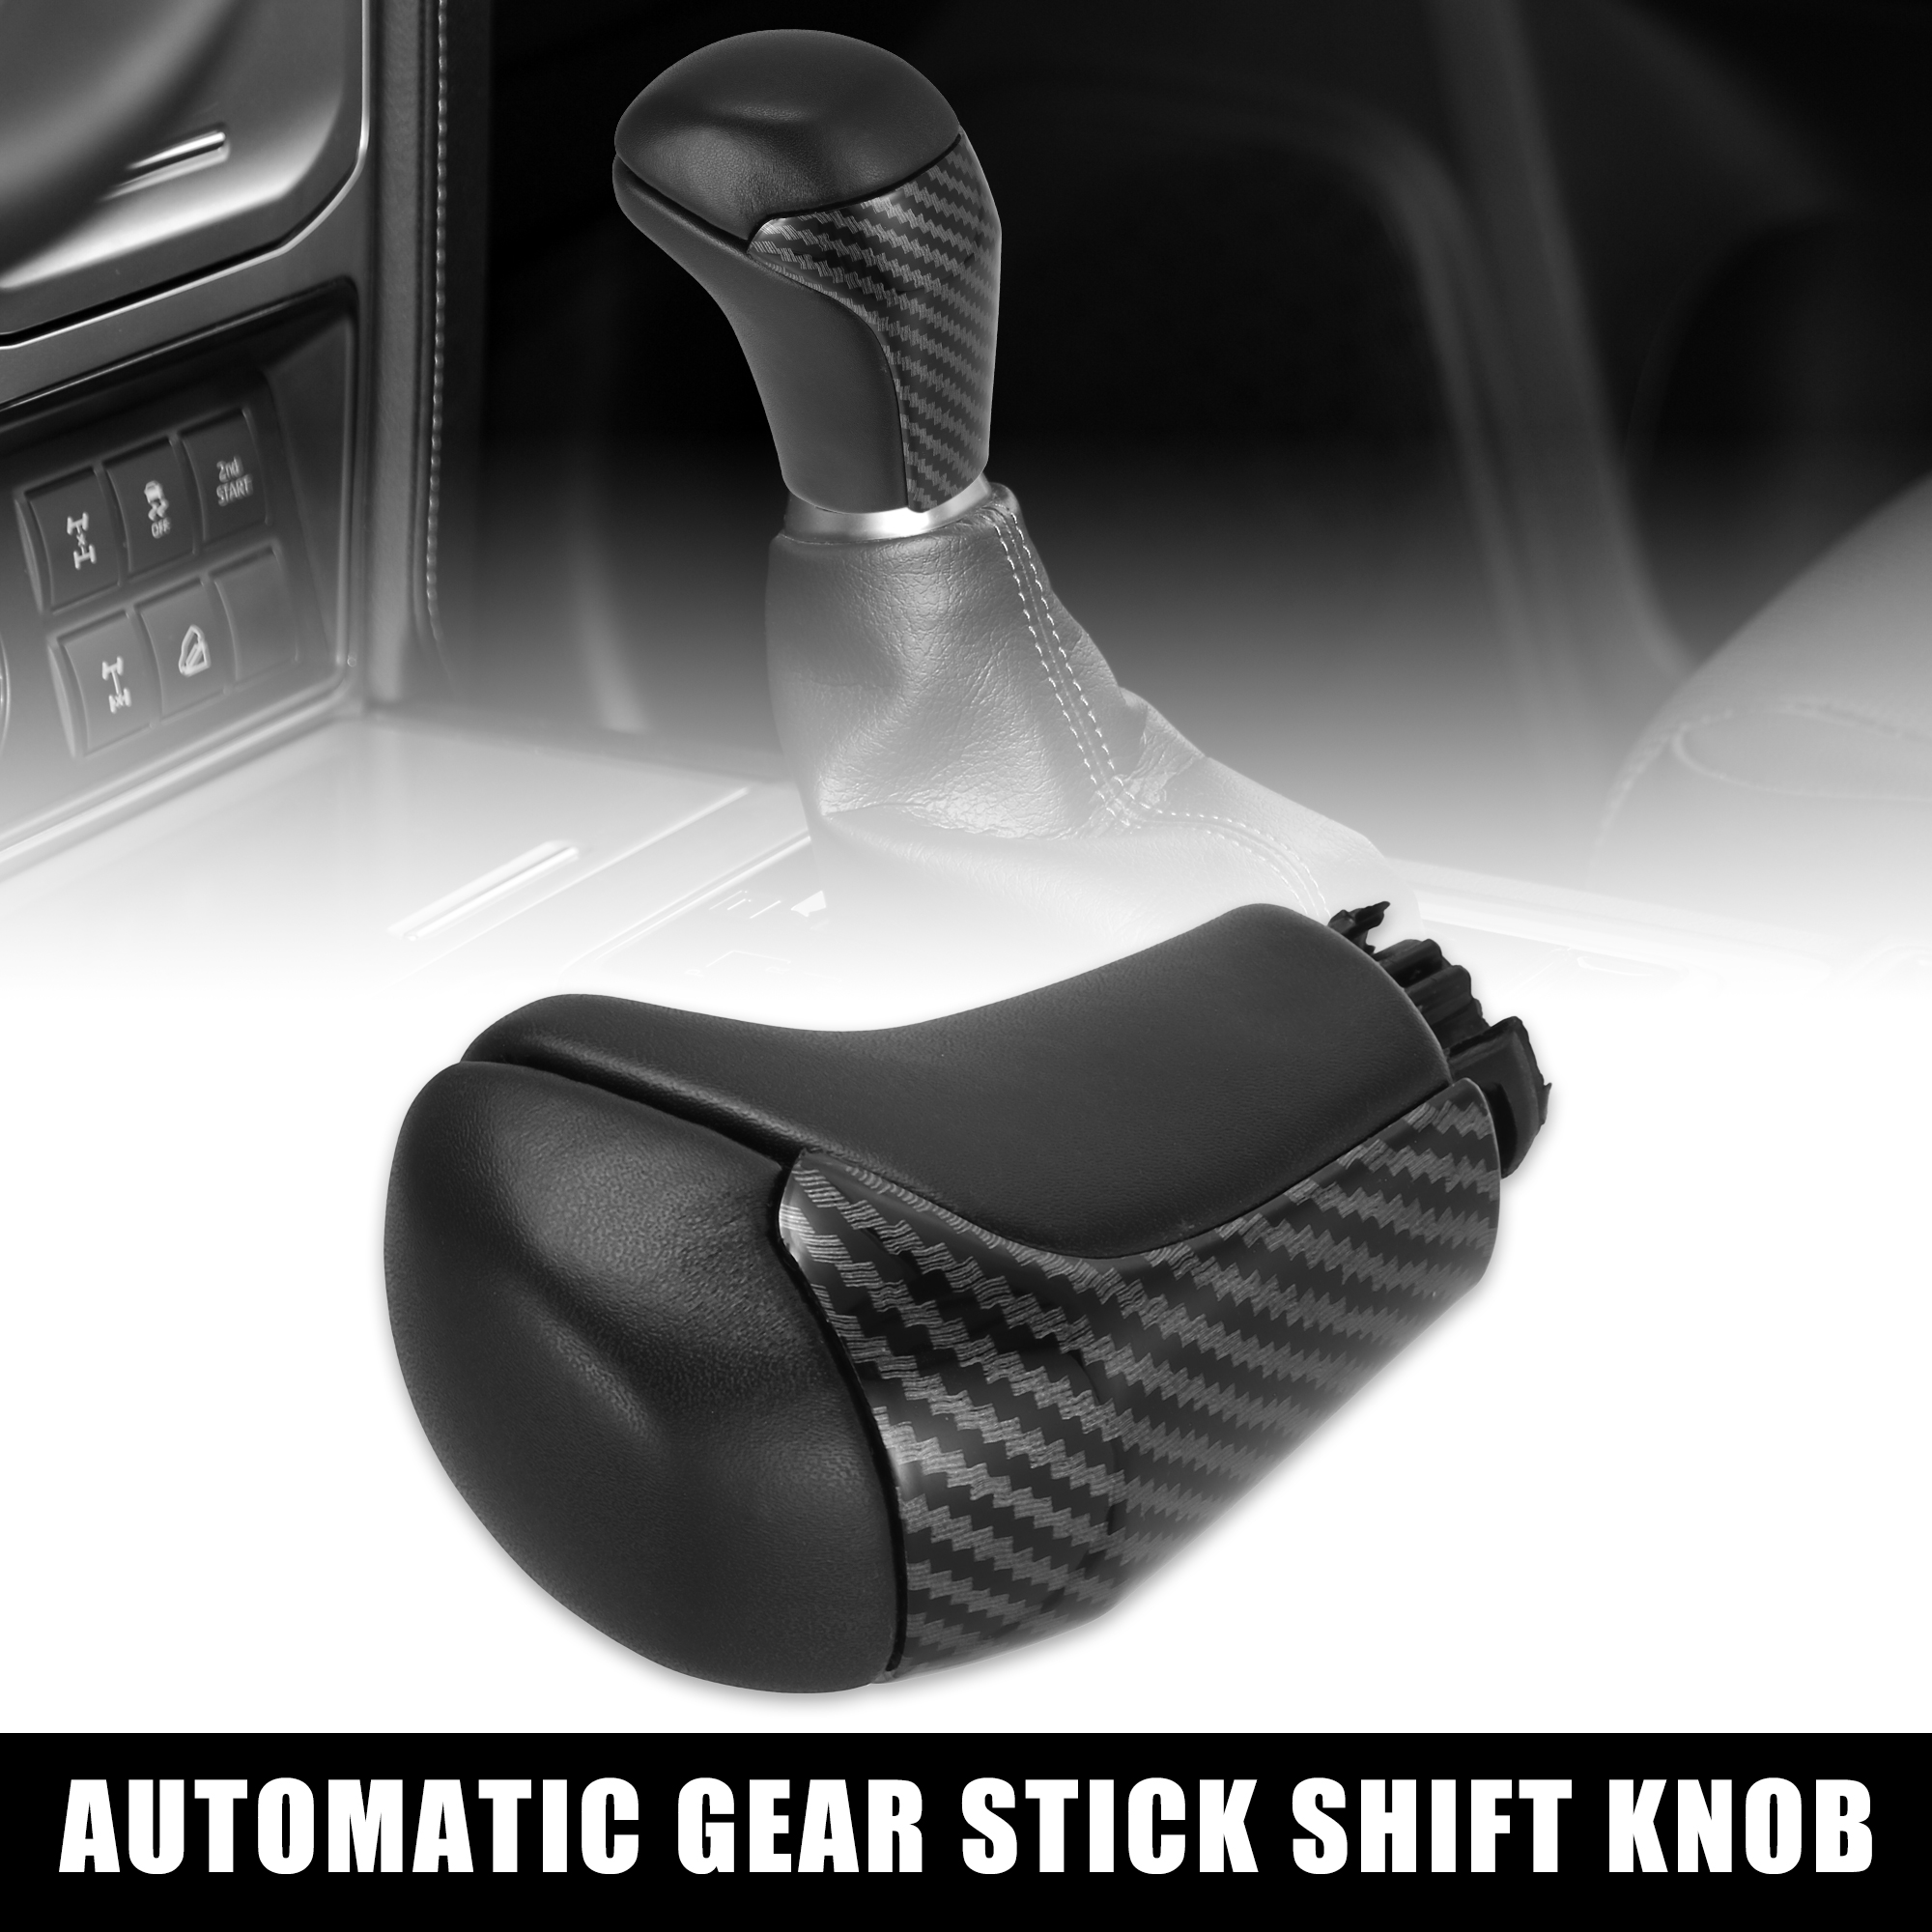 Unique Bargains Automatic Gear Stick Shift Knob for Toyota Tacoma Carbon Fiber Pattern Black